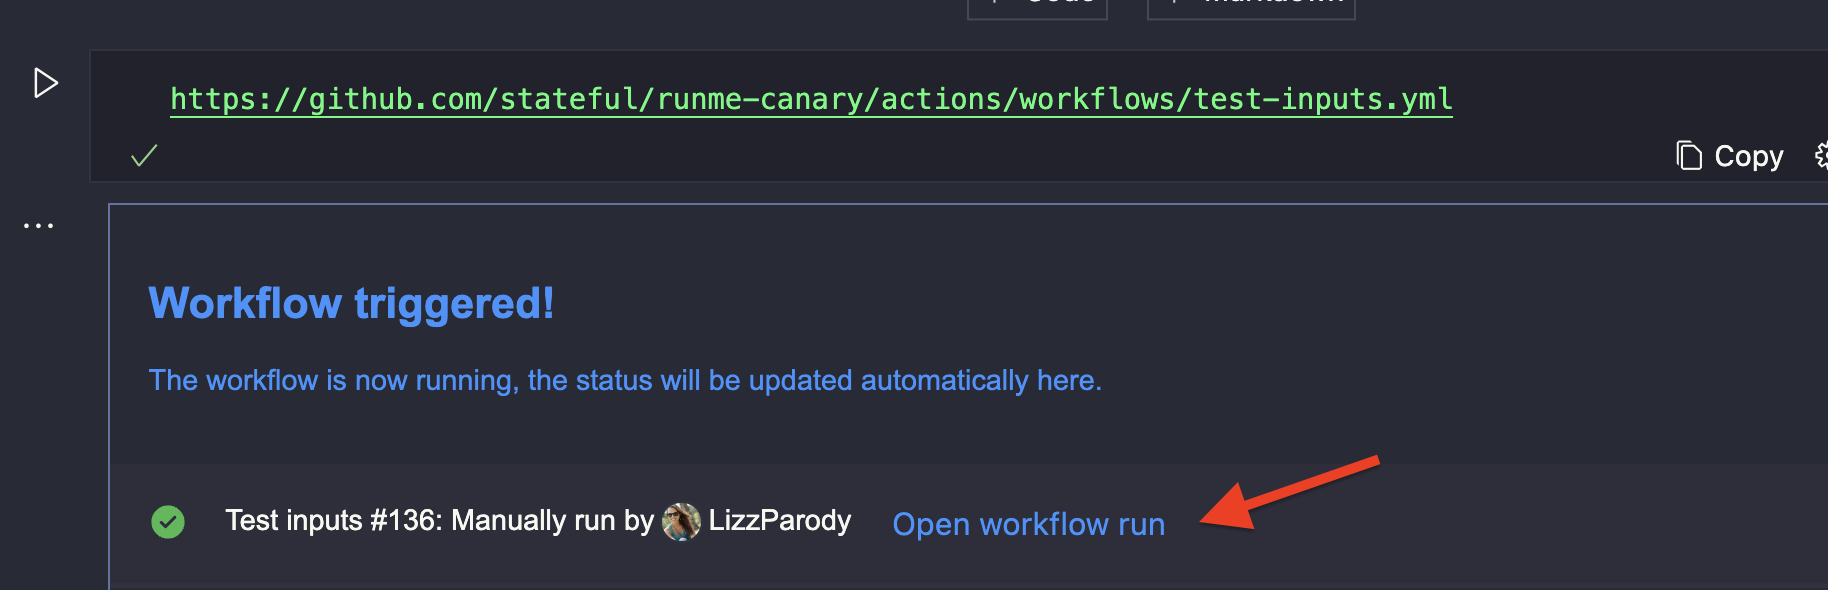 open workflow run